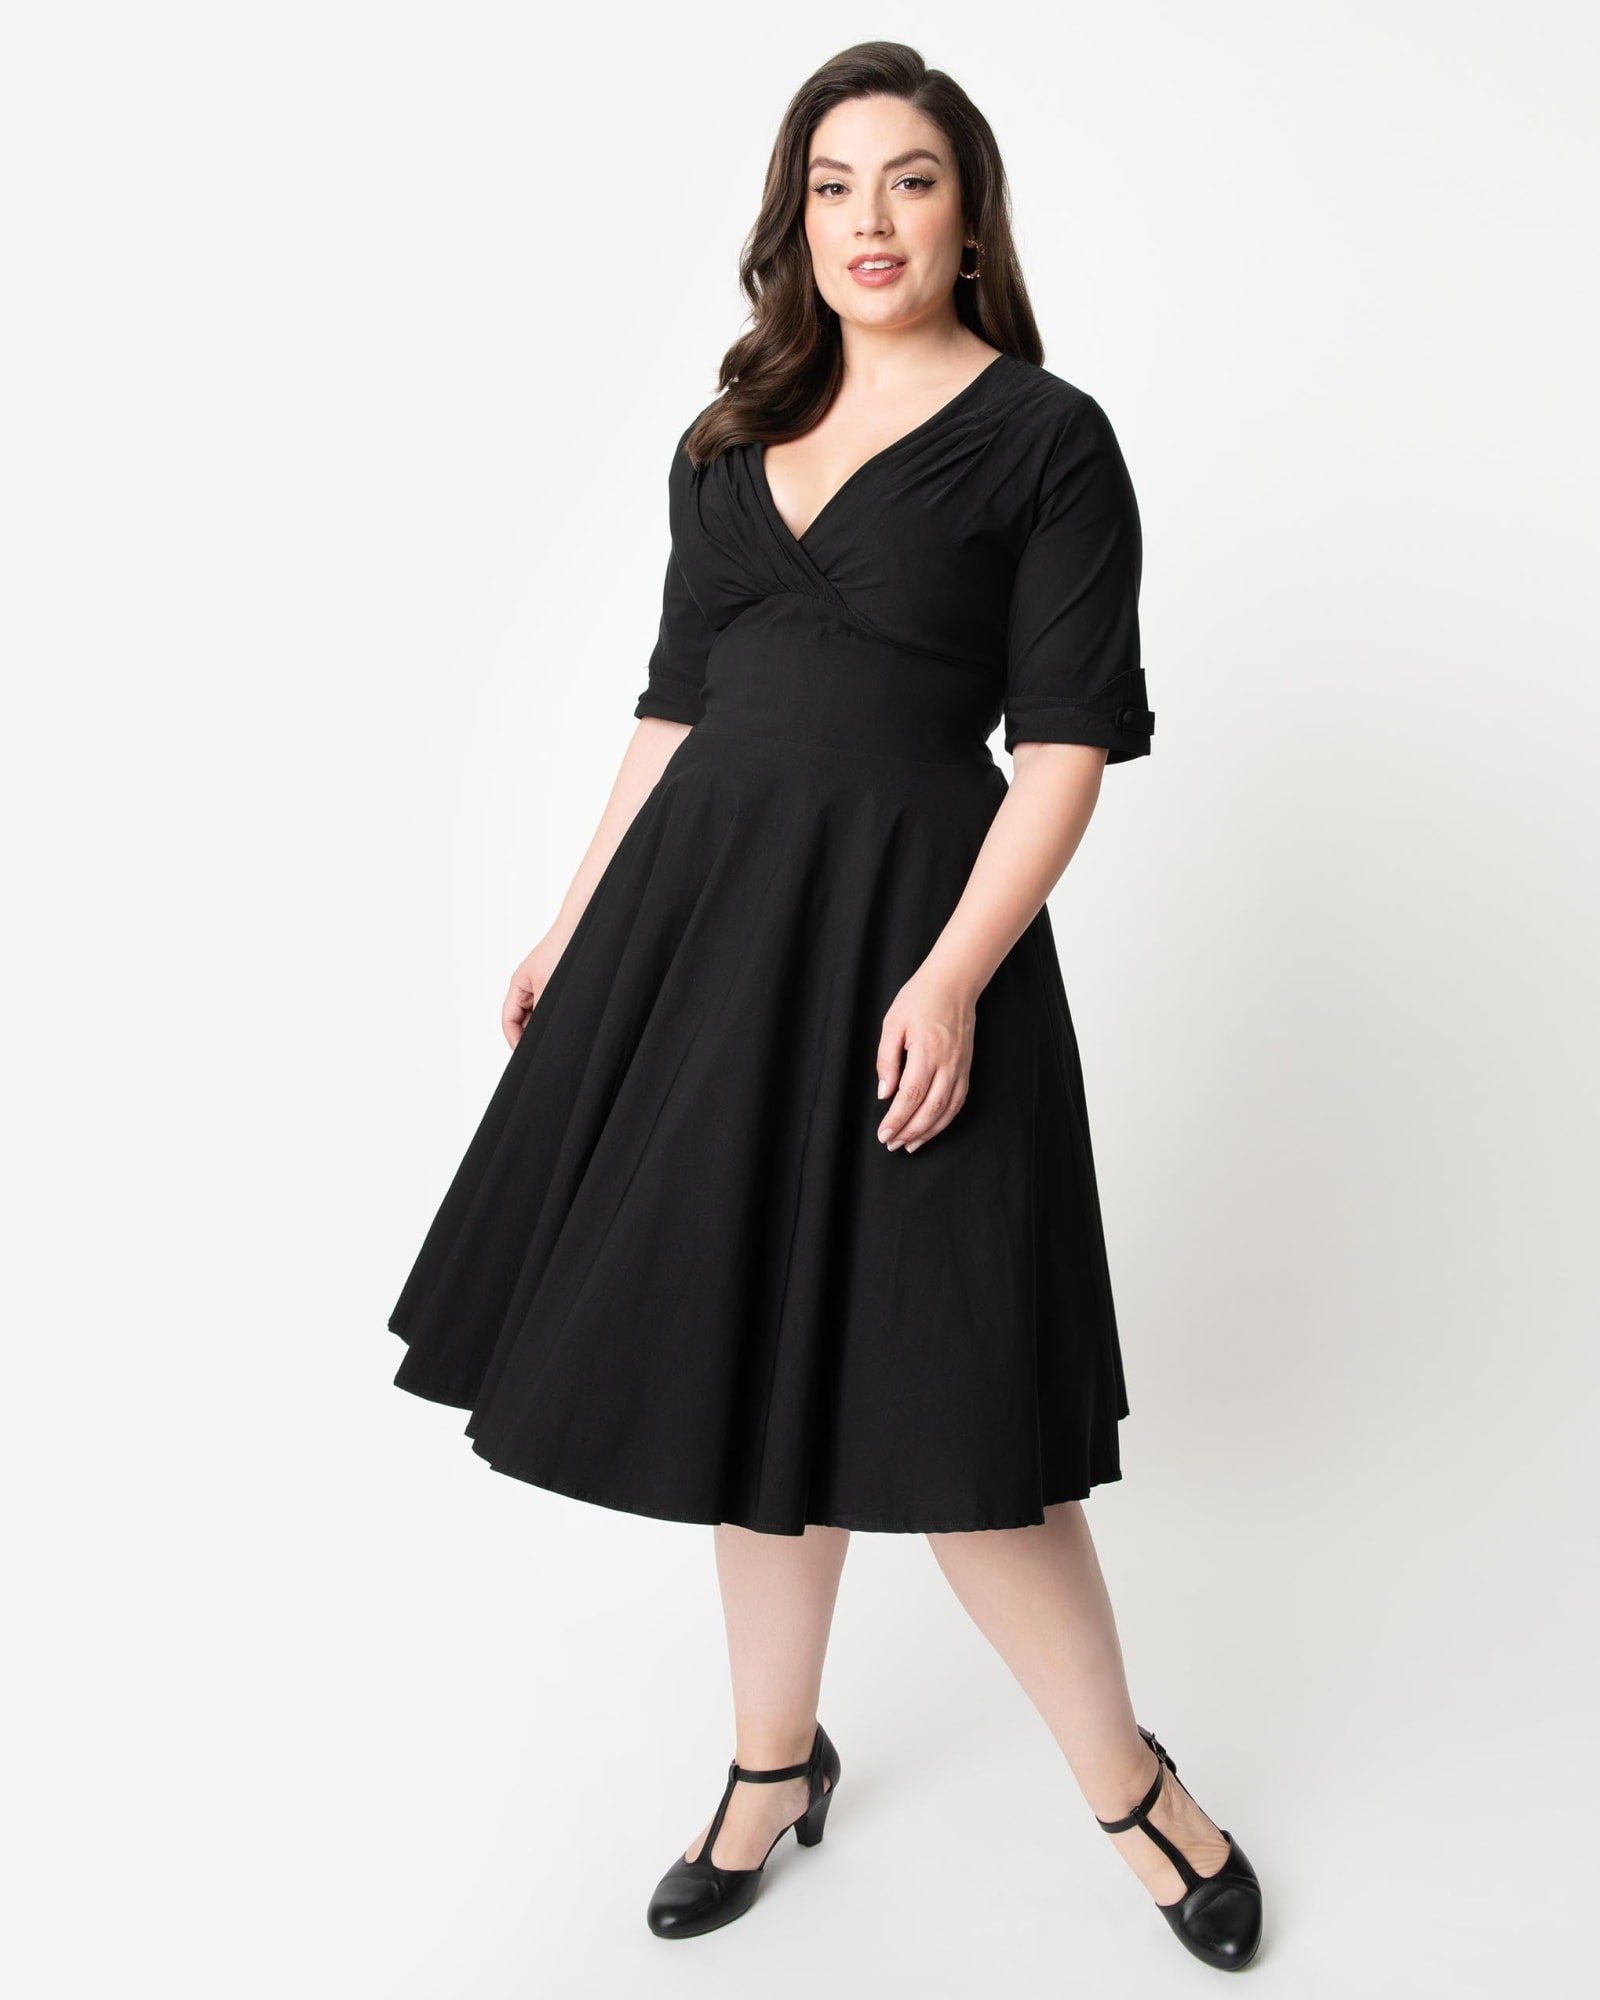 Unique Vintage Plus Size Black Delores Swing Dress with Sleeves | Black